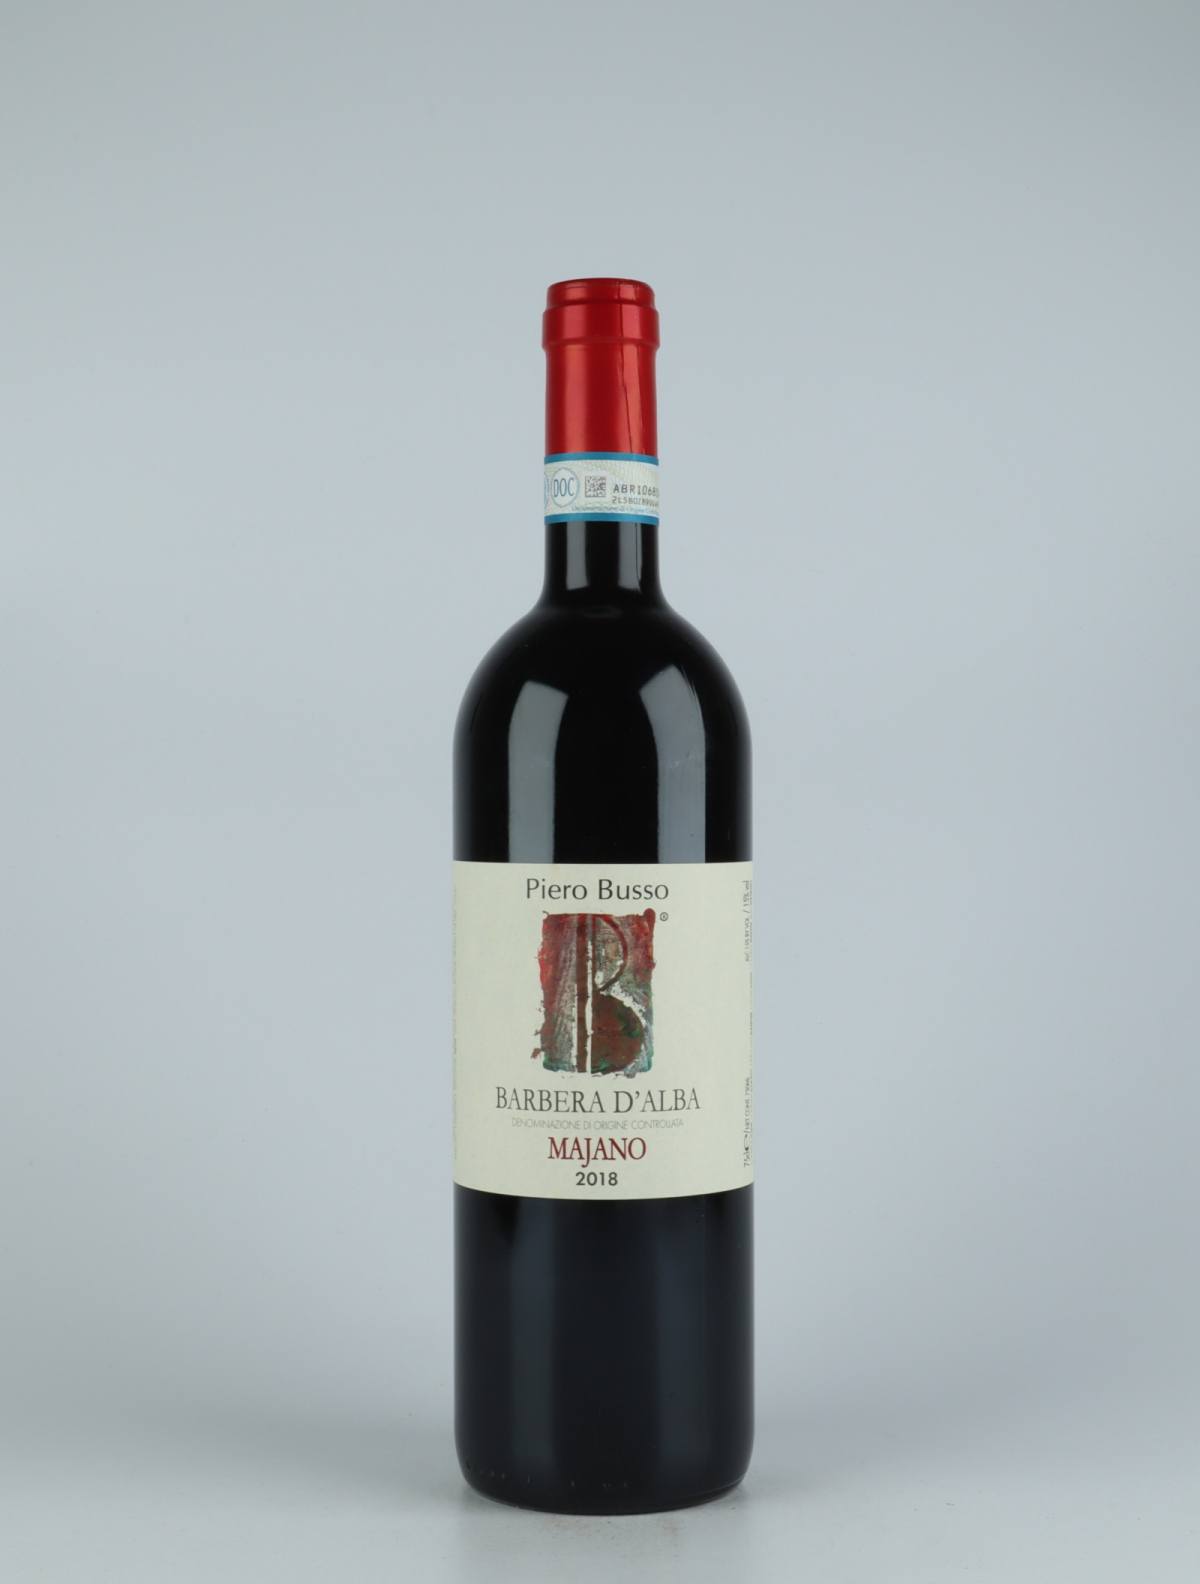 A bottle 2018 Barbera d'Alba Red wine from Piero Busso, Piedmont in Italy